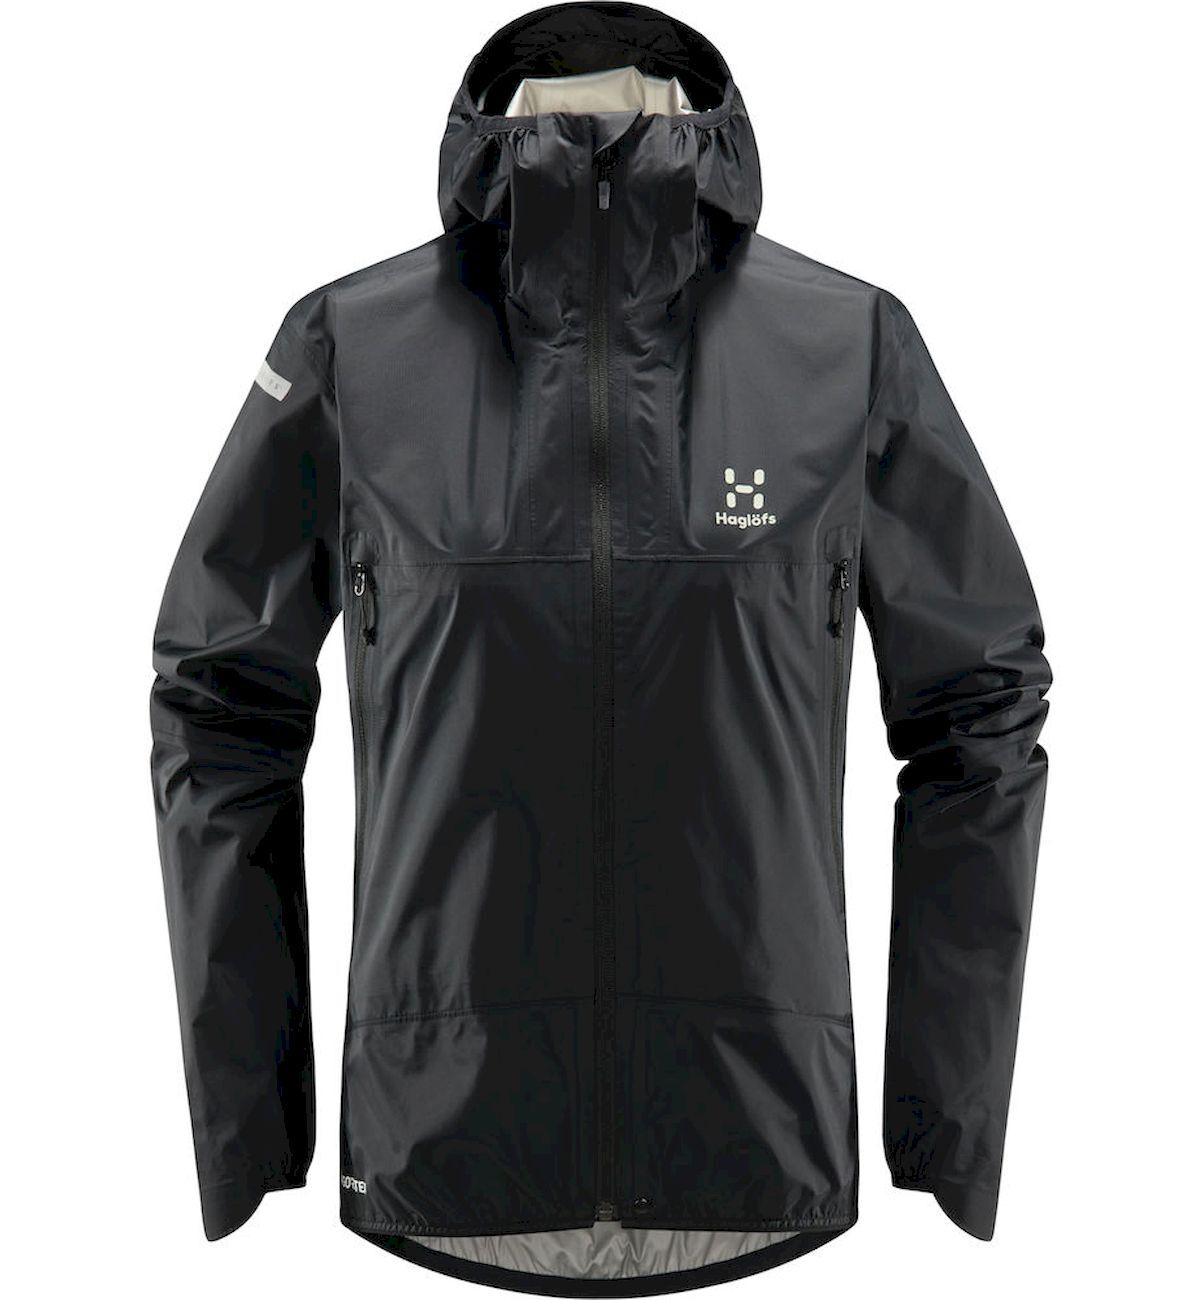 Haglöfs L.I.M GTX Jacket - Waterproof jacket - Women's